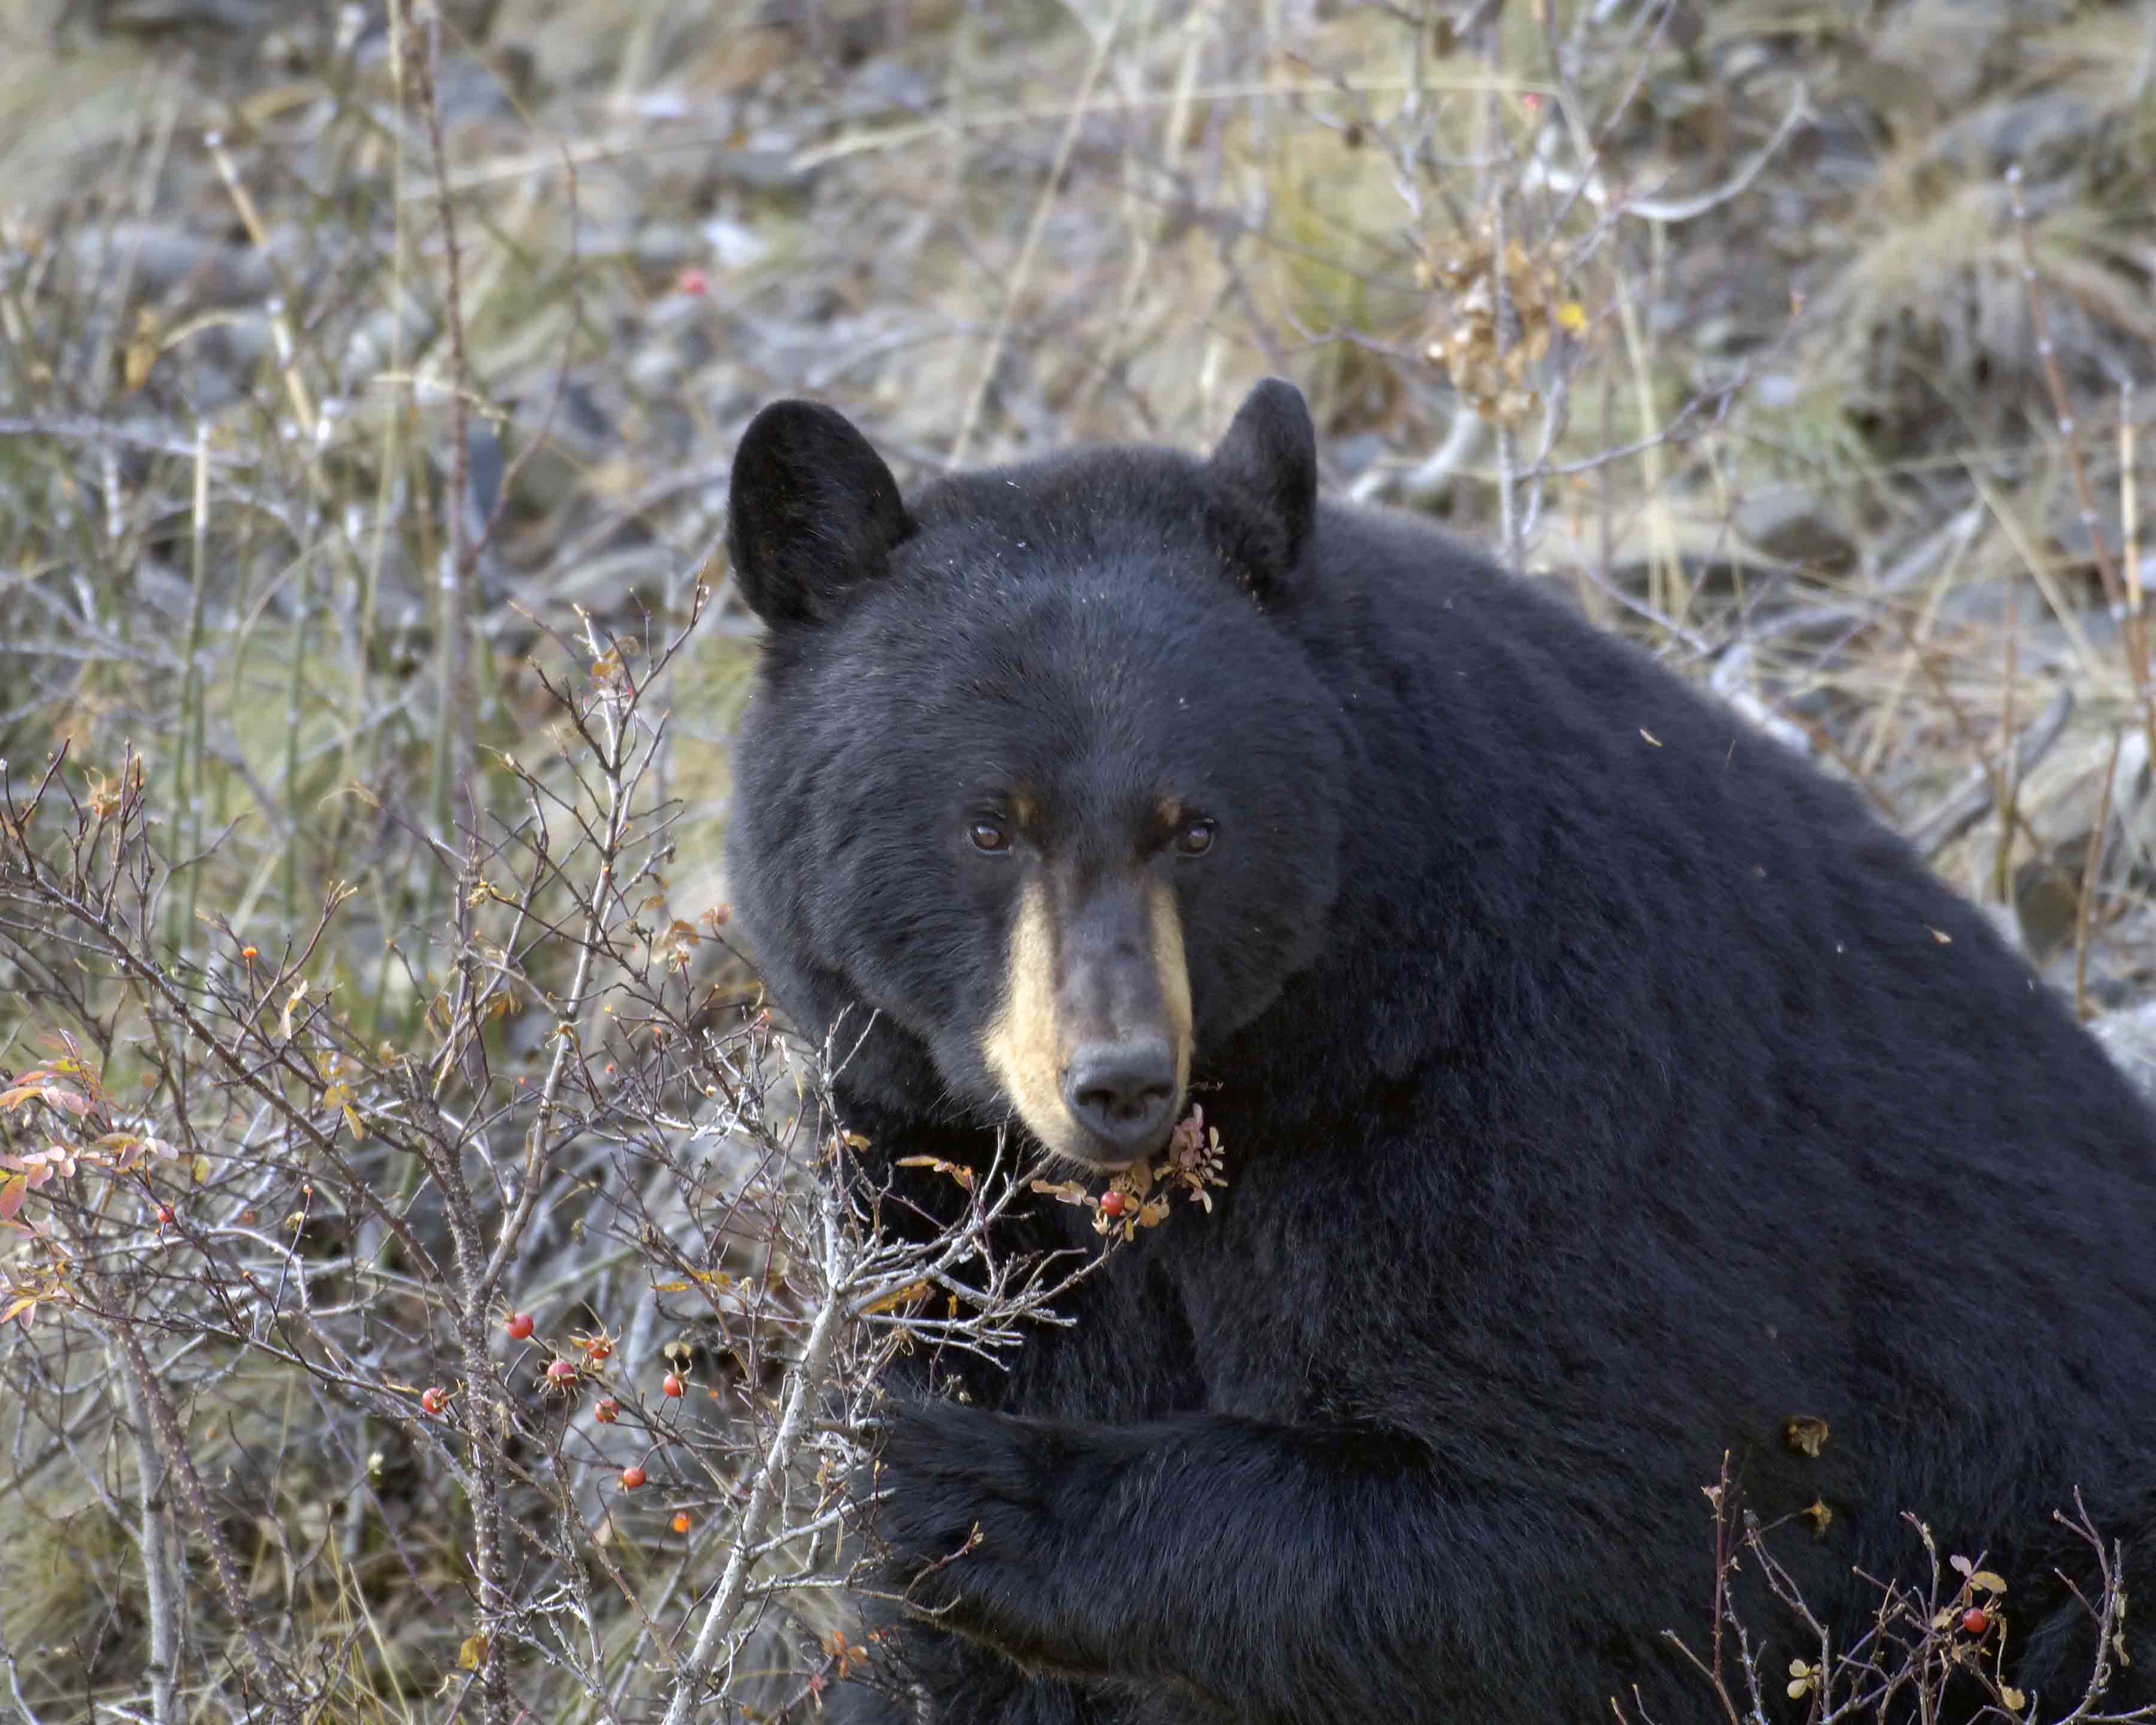 Bear, Black, eating Rosehip-101605-Tower Junction, Yellowstone Natl Park, WY-#0182.jpg